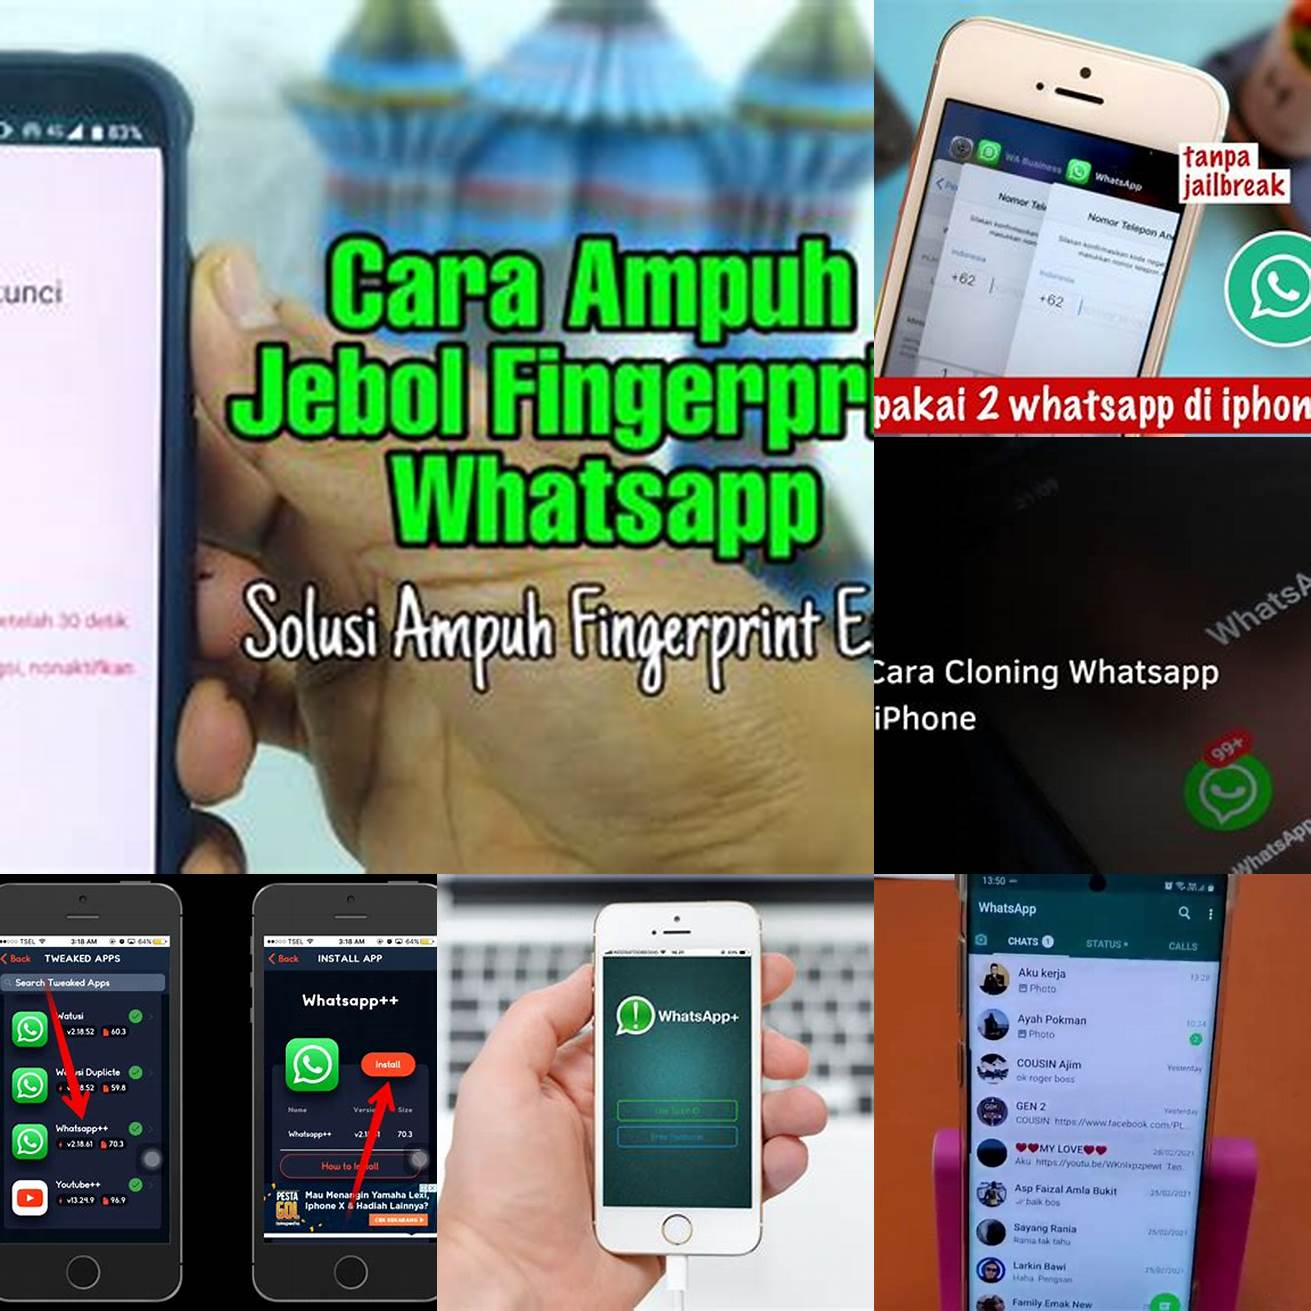 1 Buka aplikasi WhatsApp di iPhone Anda